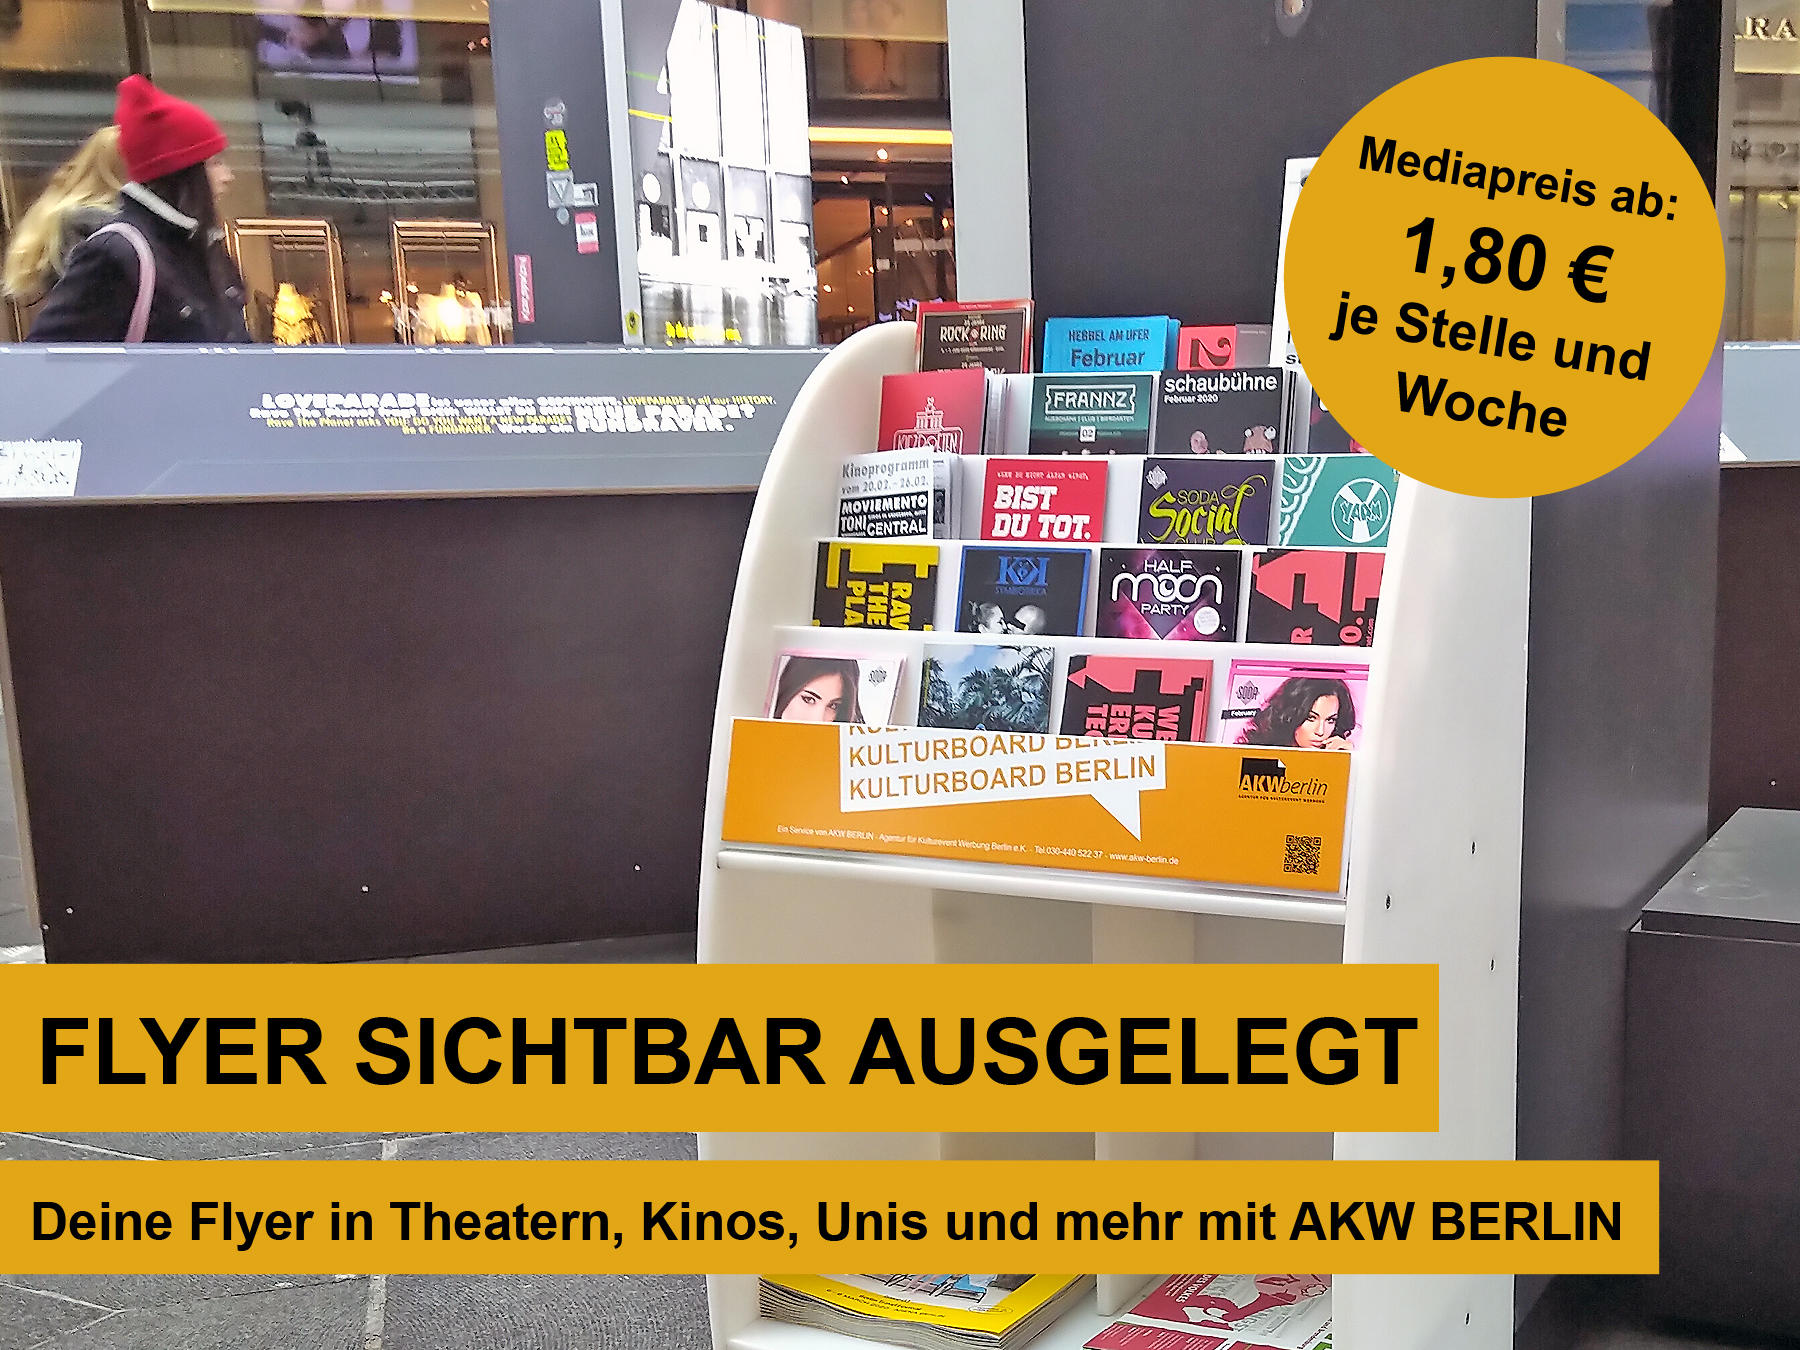 Bilder AKW Berlin - Agentur für Kulturevent Werbung Berlin e.K.